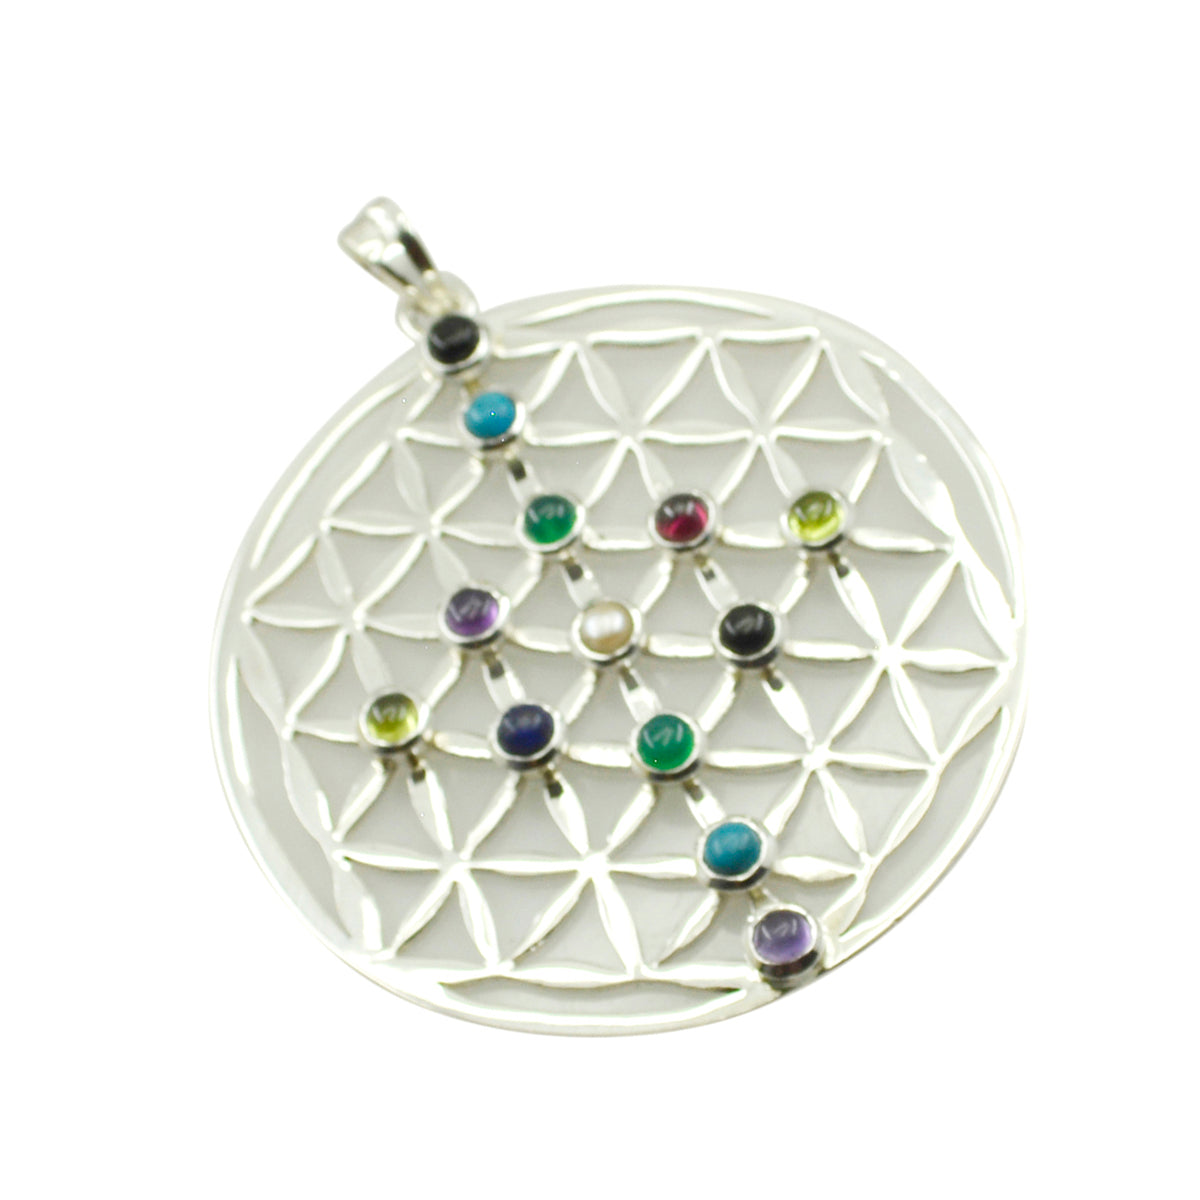 Riyo Ravishing Gemstone Round Cabochon Multi Color Multi Stone 1023 Sterling Silver Pendant Gift For Teachers Day